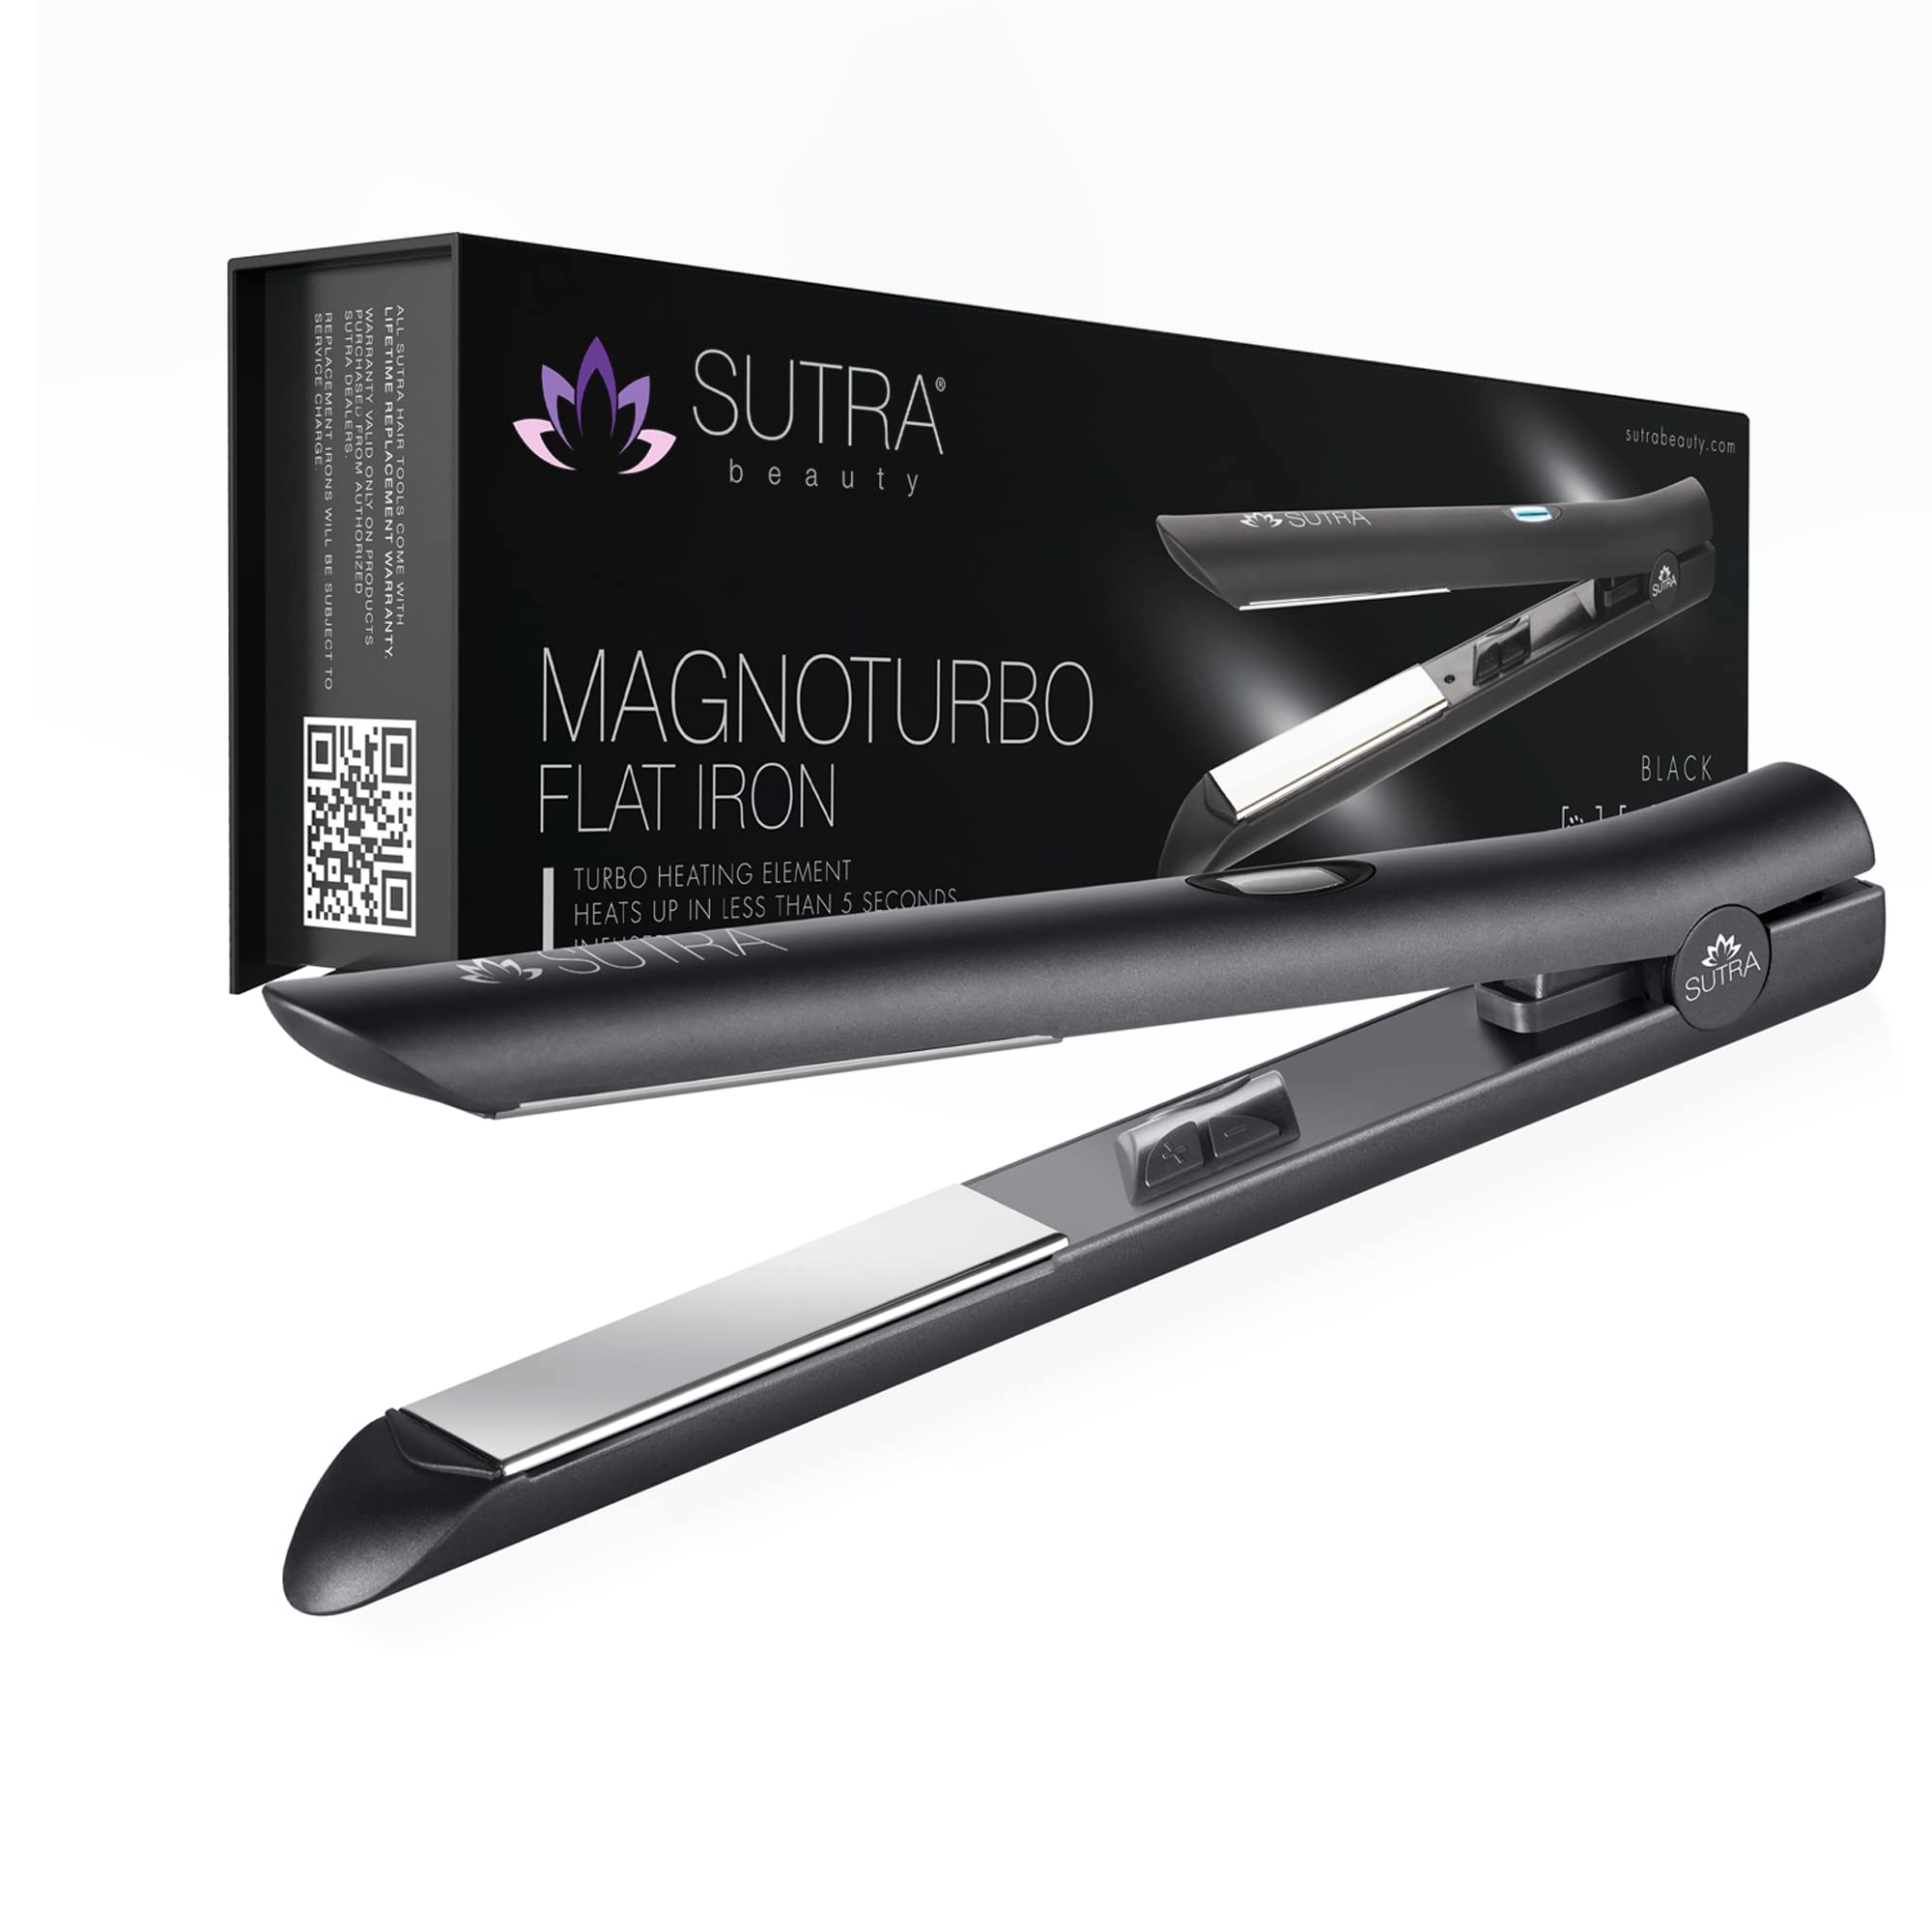 SUTRA Professional Magno Turbo Flat Iron Titanium Hair Straightener, Rapid Heat up to 450°F LCD Display, Dual Voltage, Auto Shut Off, 1-inch